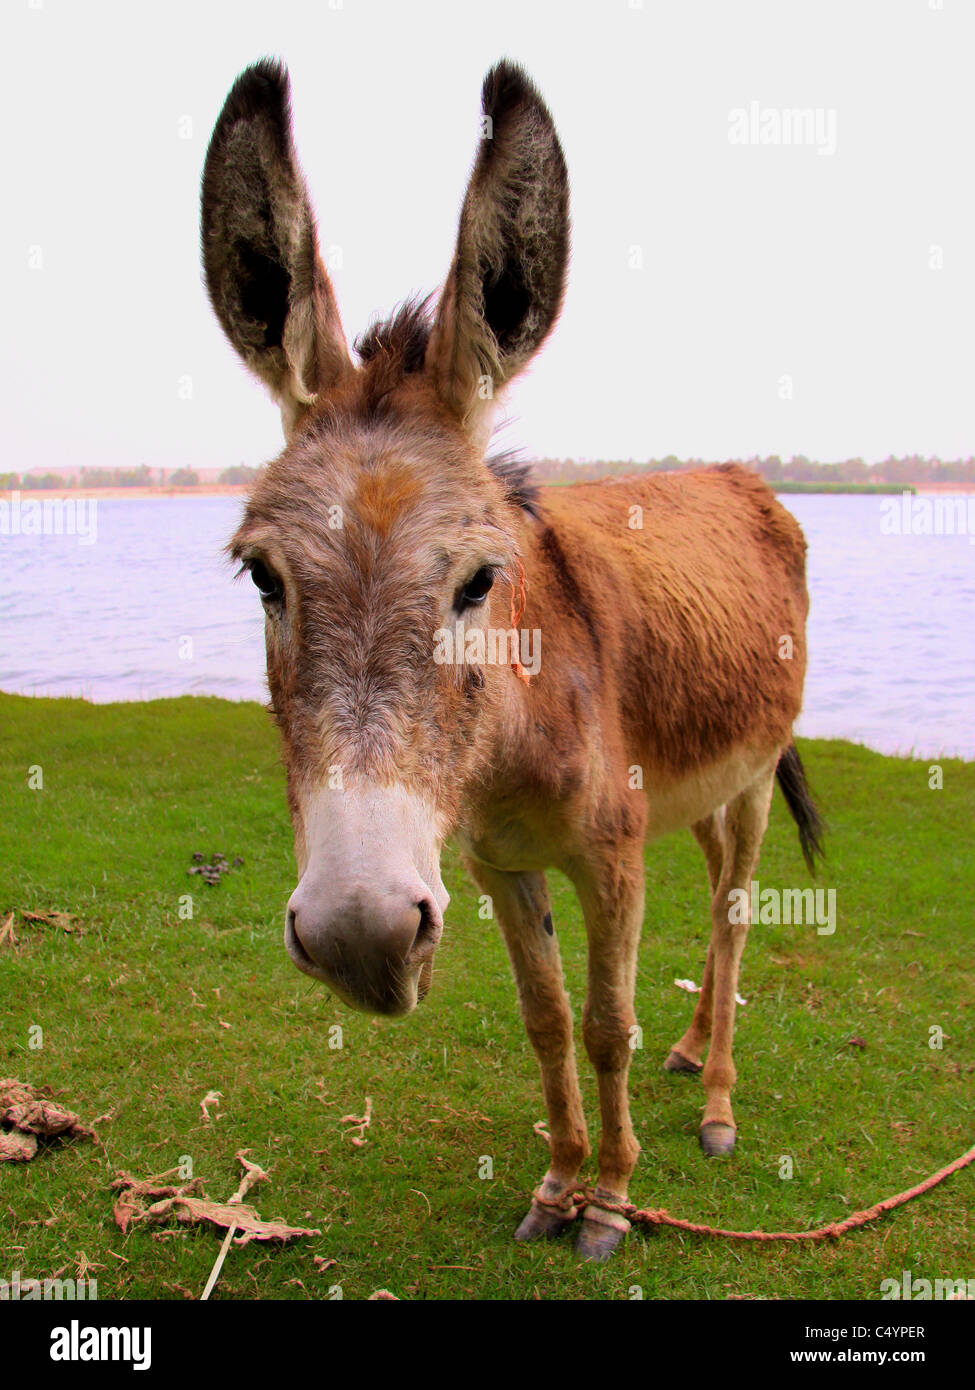 Donkey by the Nile Stock Photo